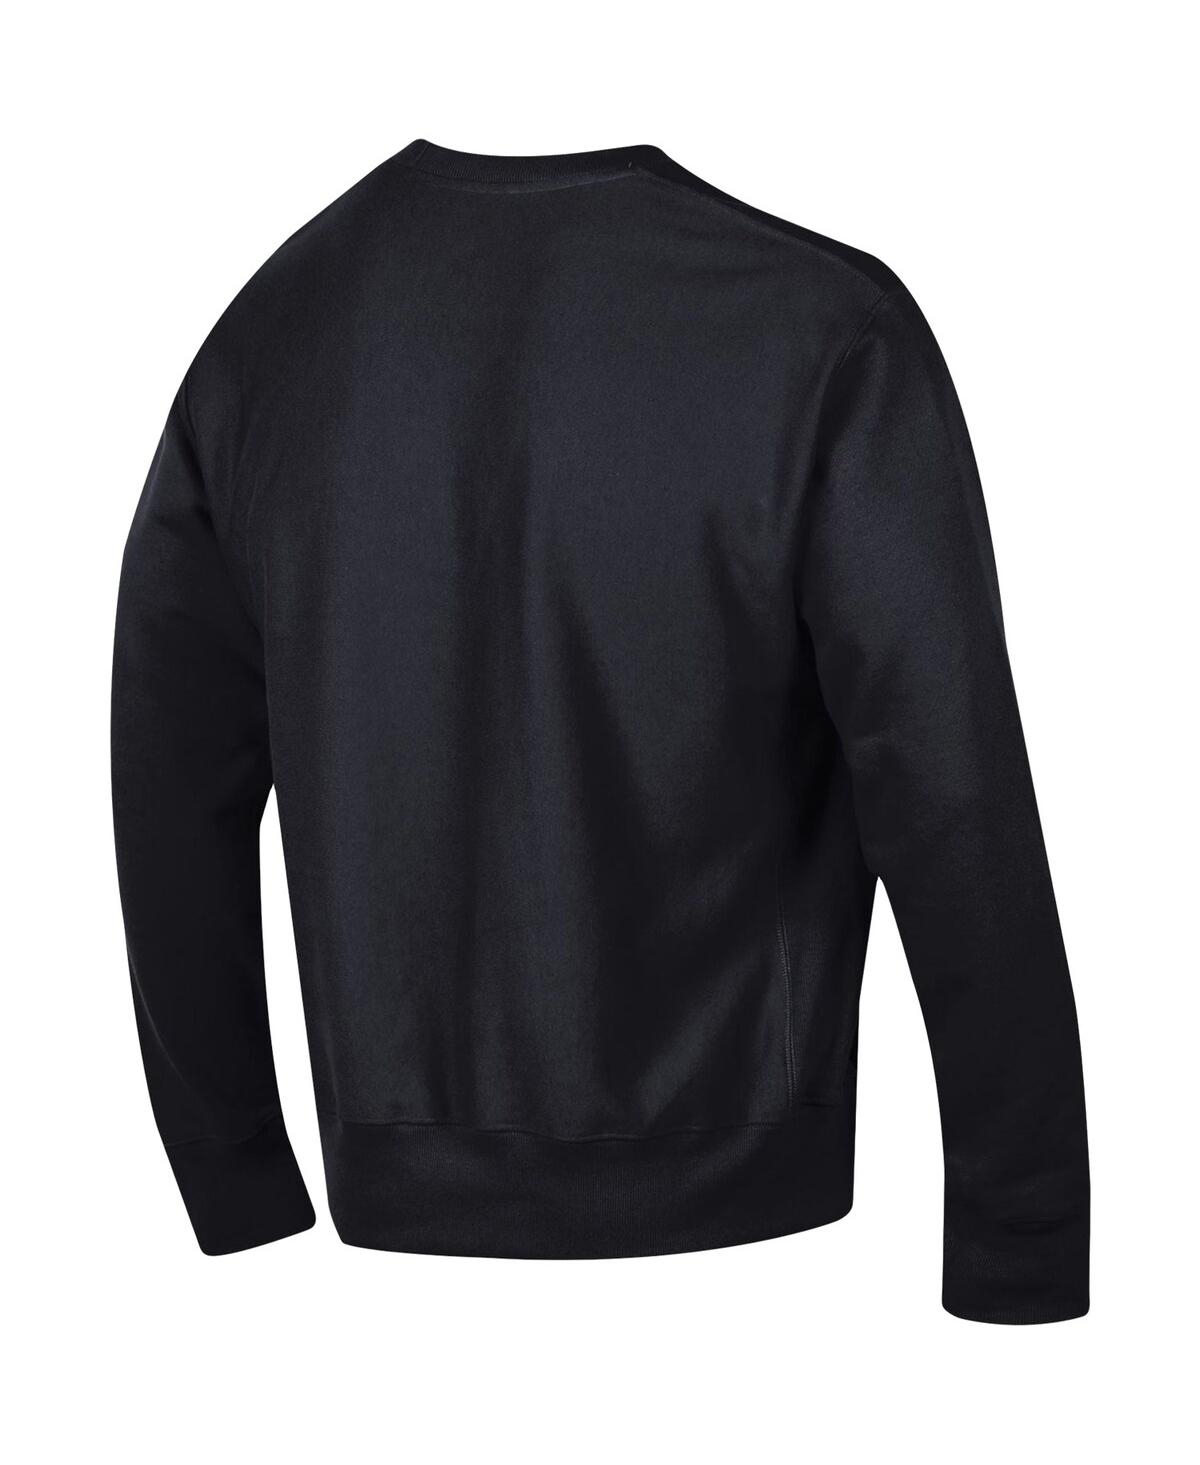 Shop Champion Men's  Black Ohio State Buckeyes Arch Reverse Weave Pullover Sweatshirt